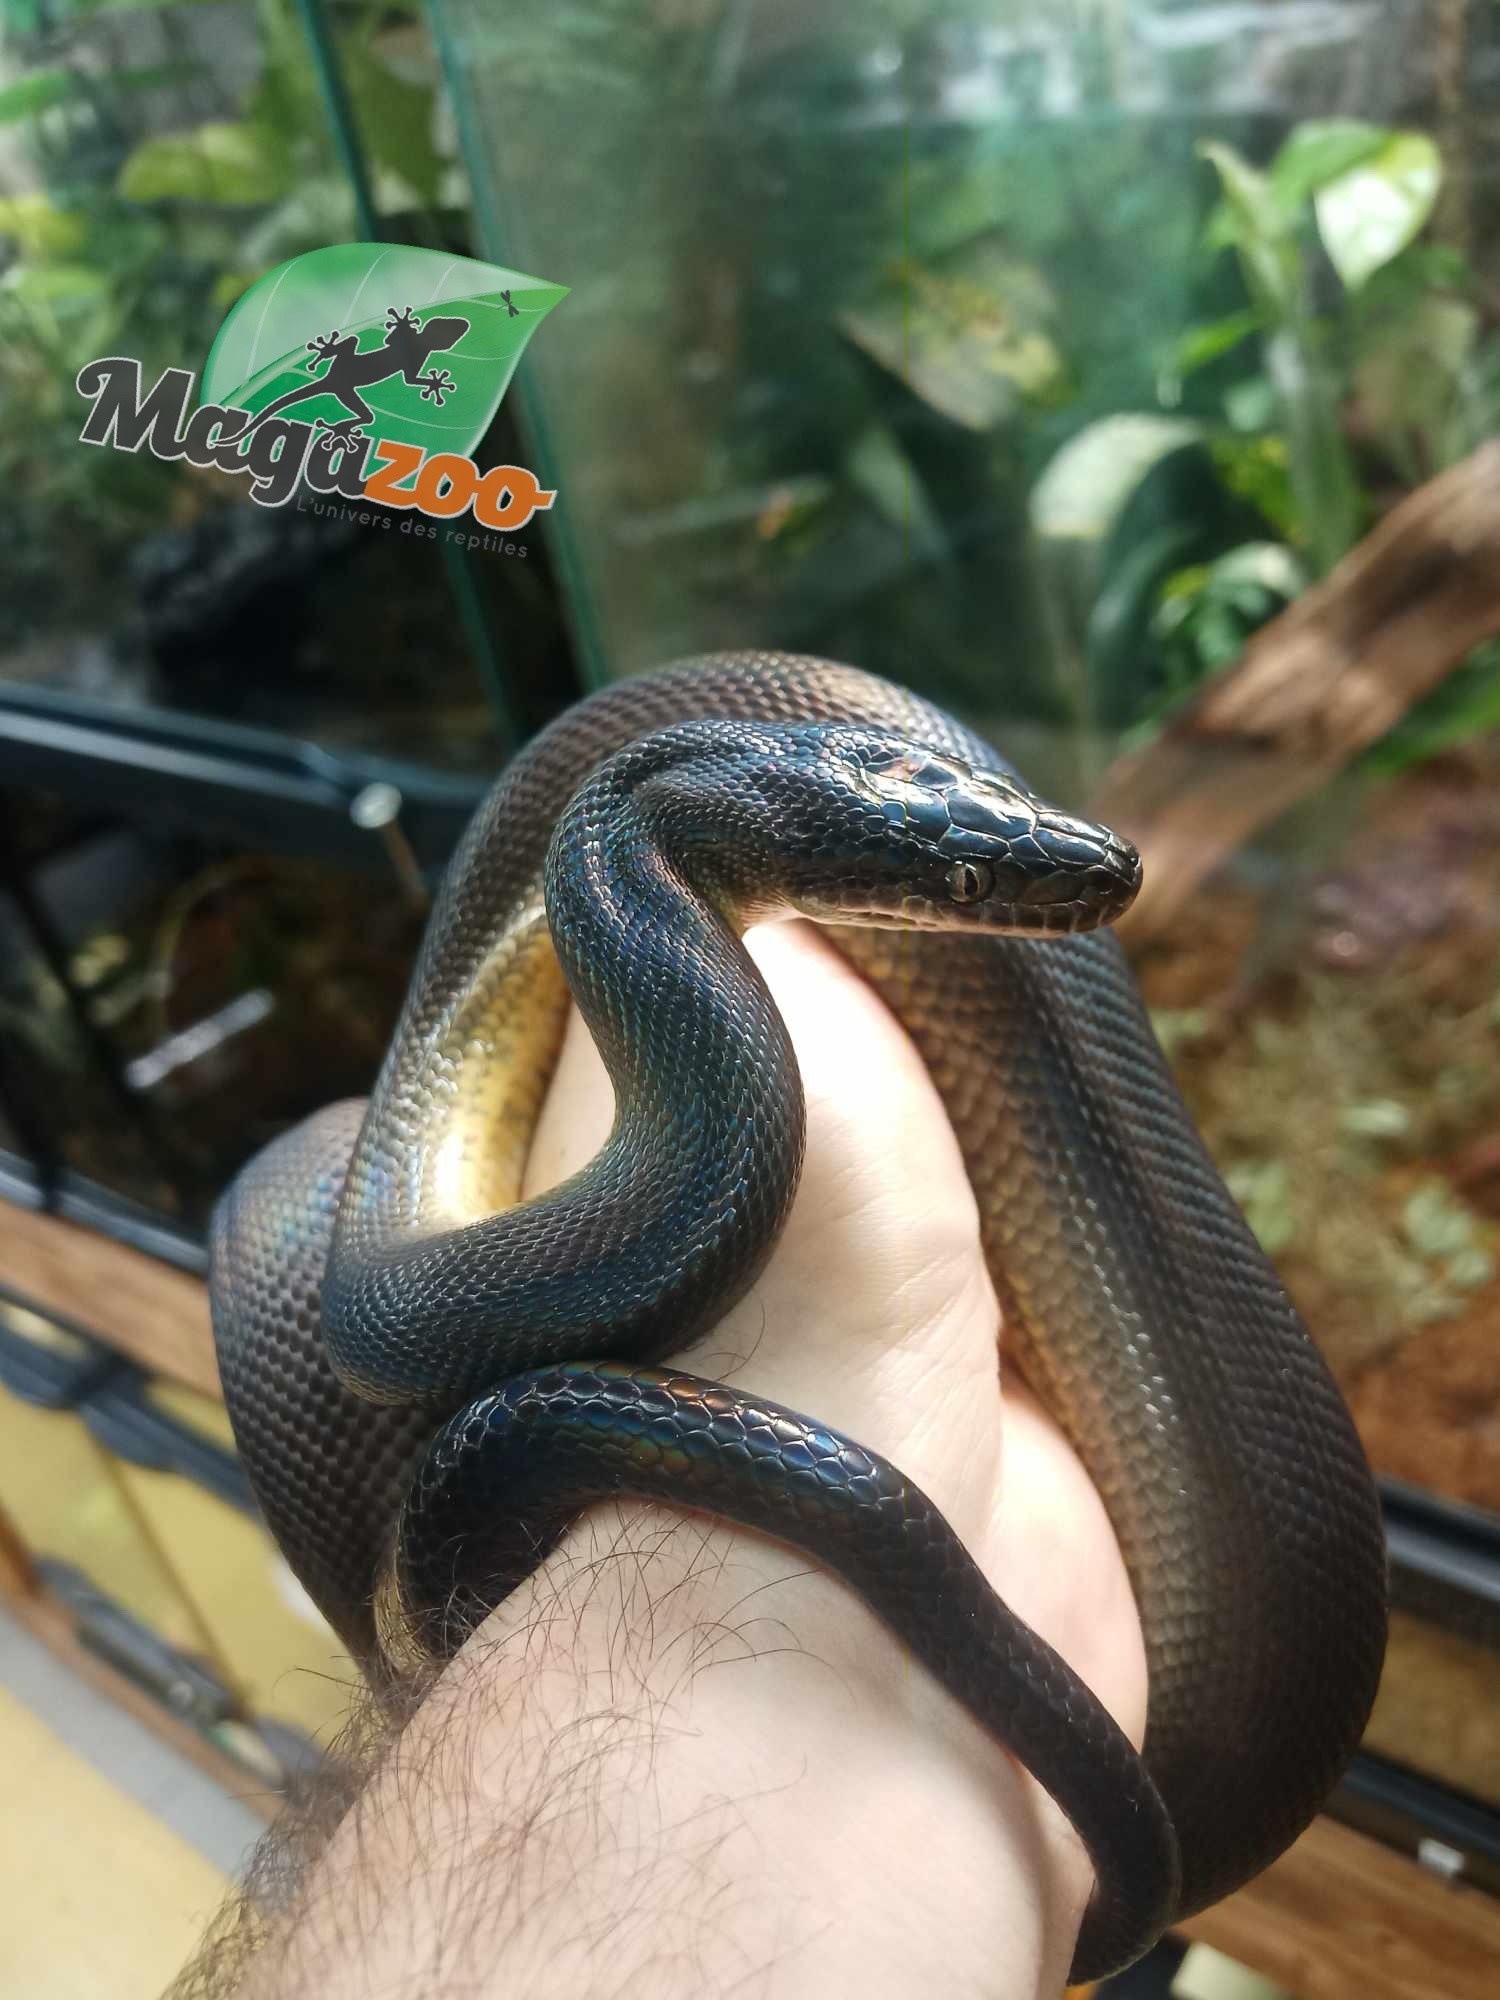 Magazoo Australian water python female born in captivity on December 12, 2021